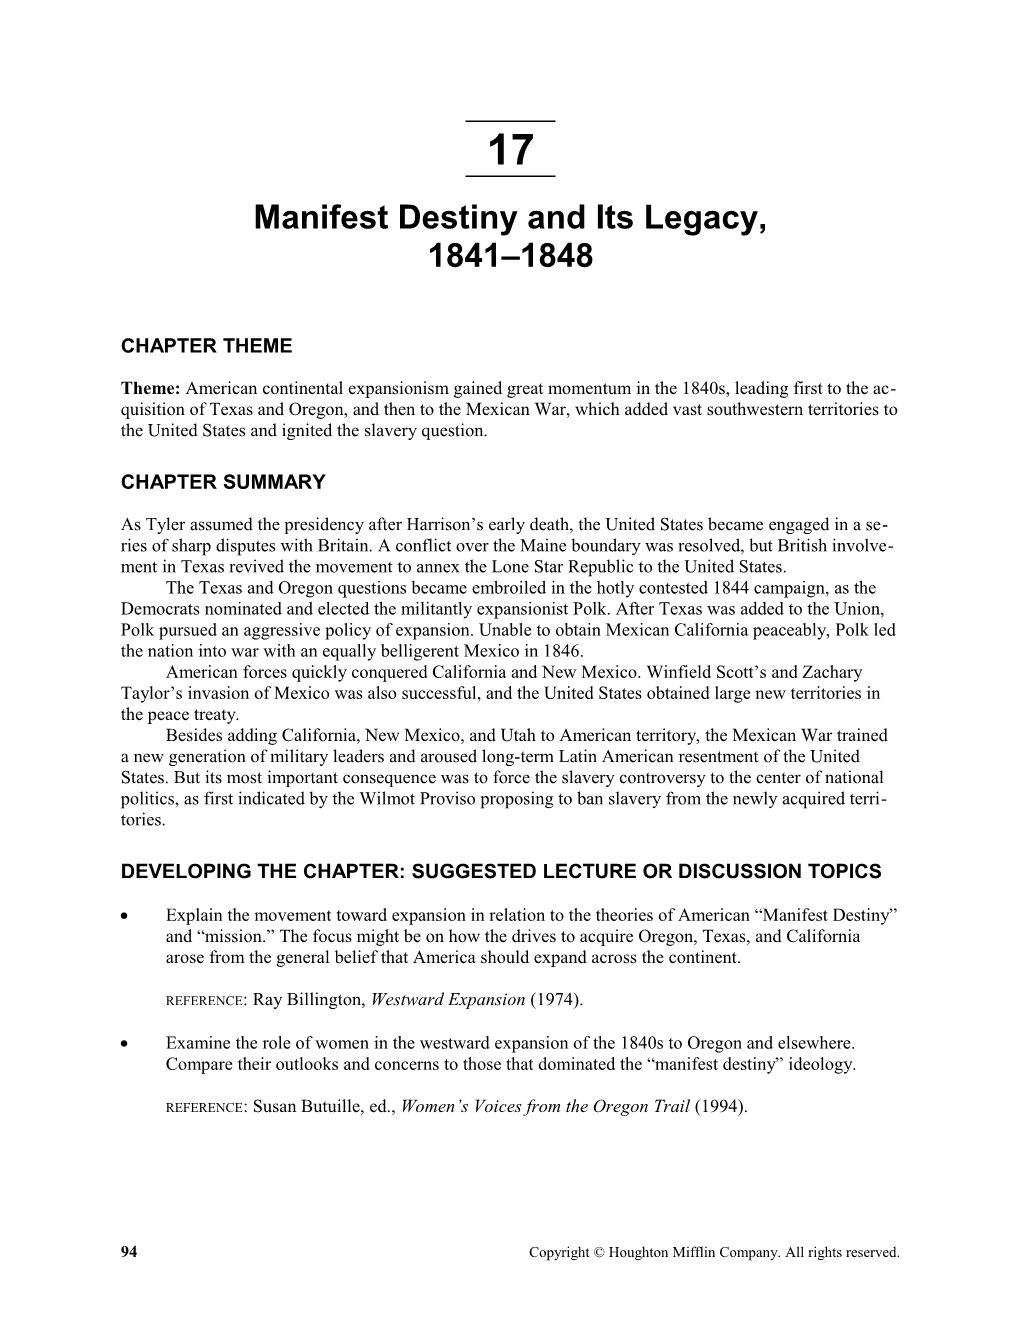 Manifest Destiny and Its Legacy, 1841-1848